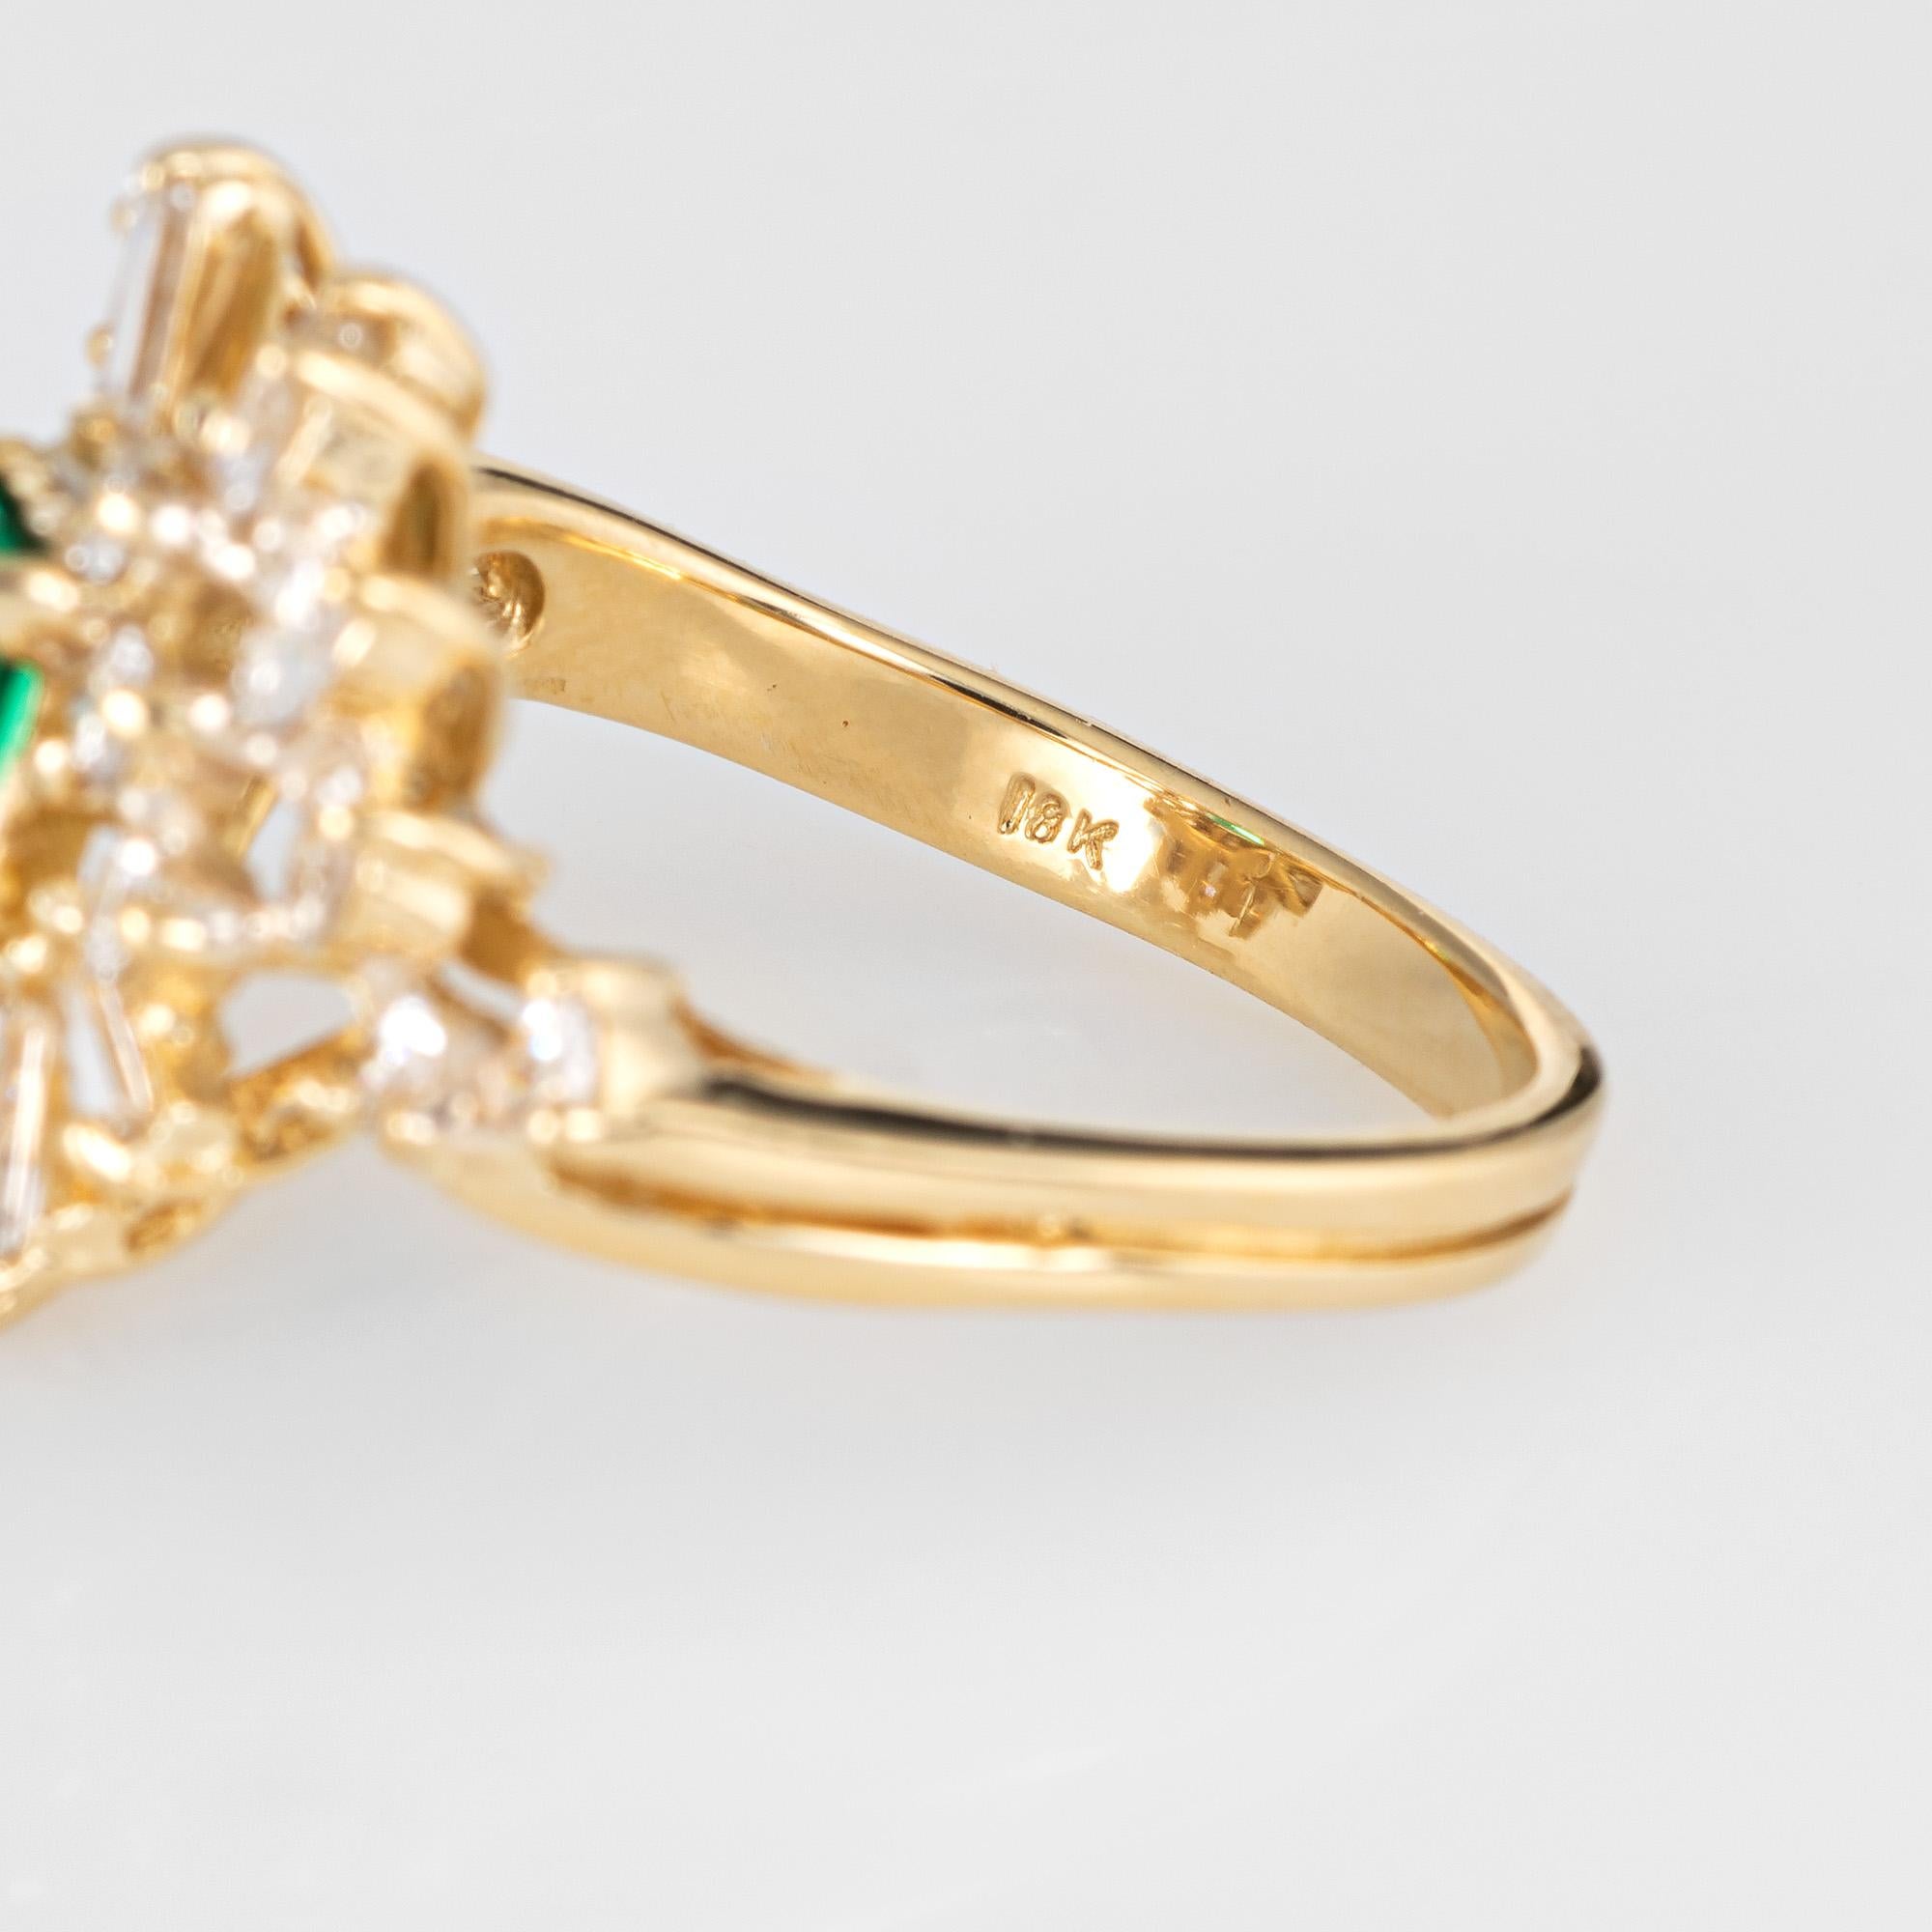 Emerald Diamond Cocktail Ring Vintage 18 Karat Gold Mixed Cut Estate Jewelry 1